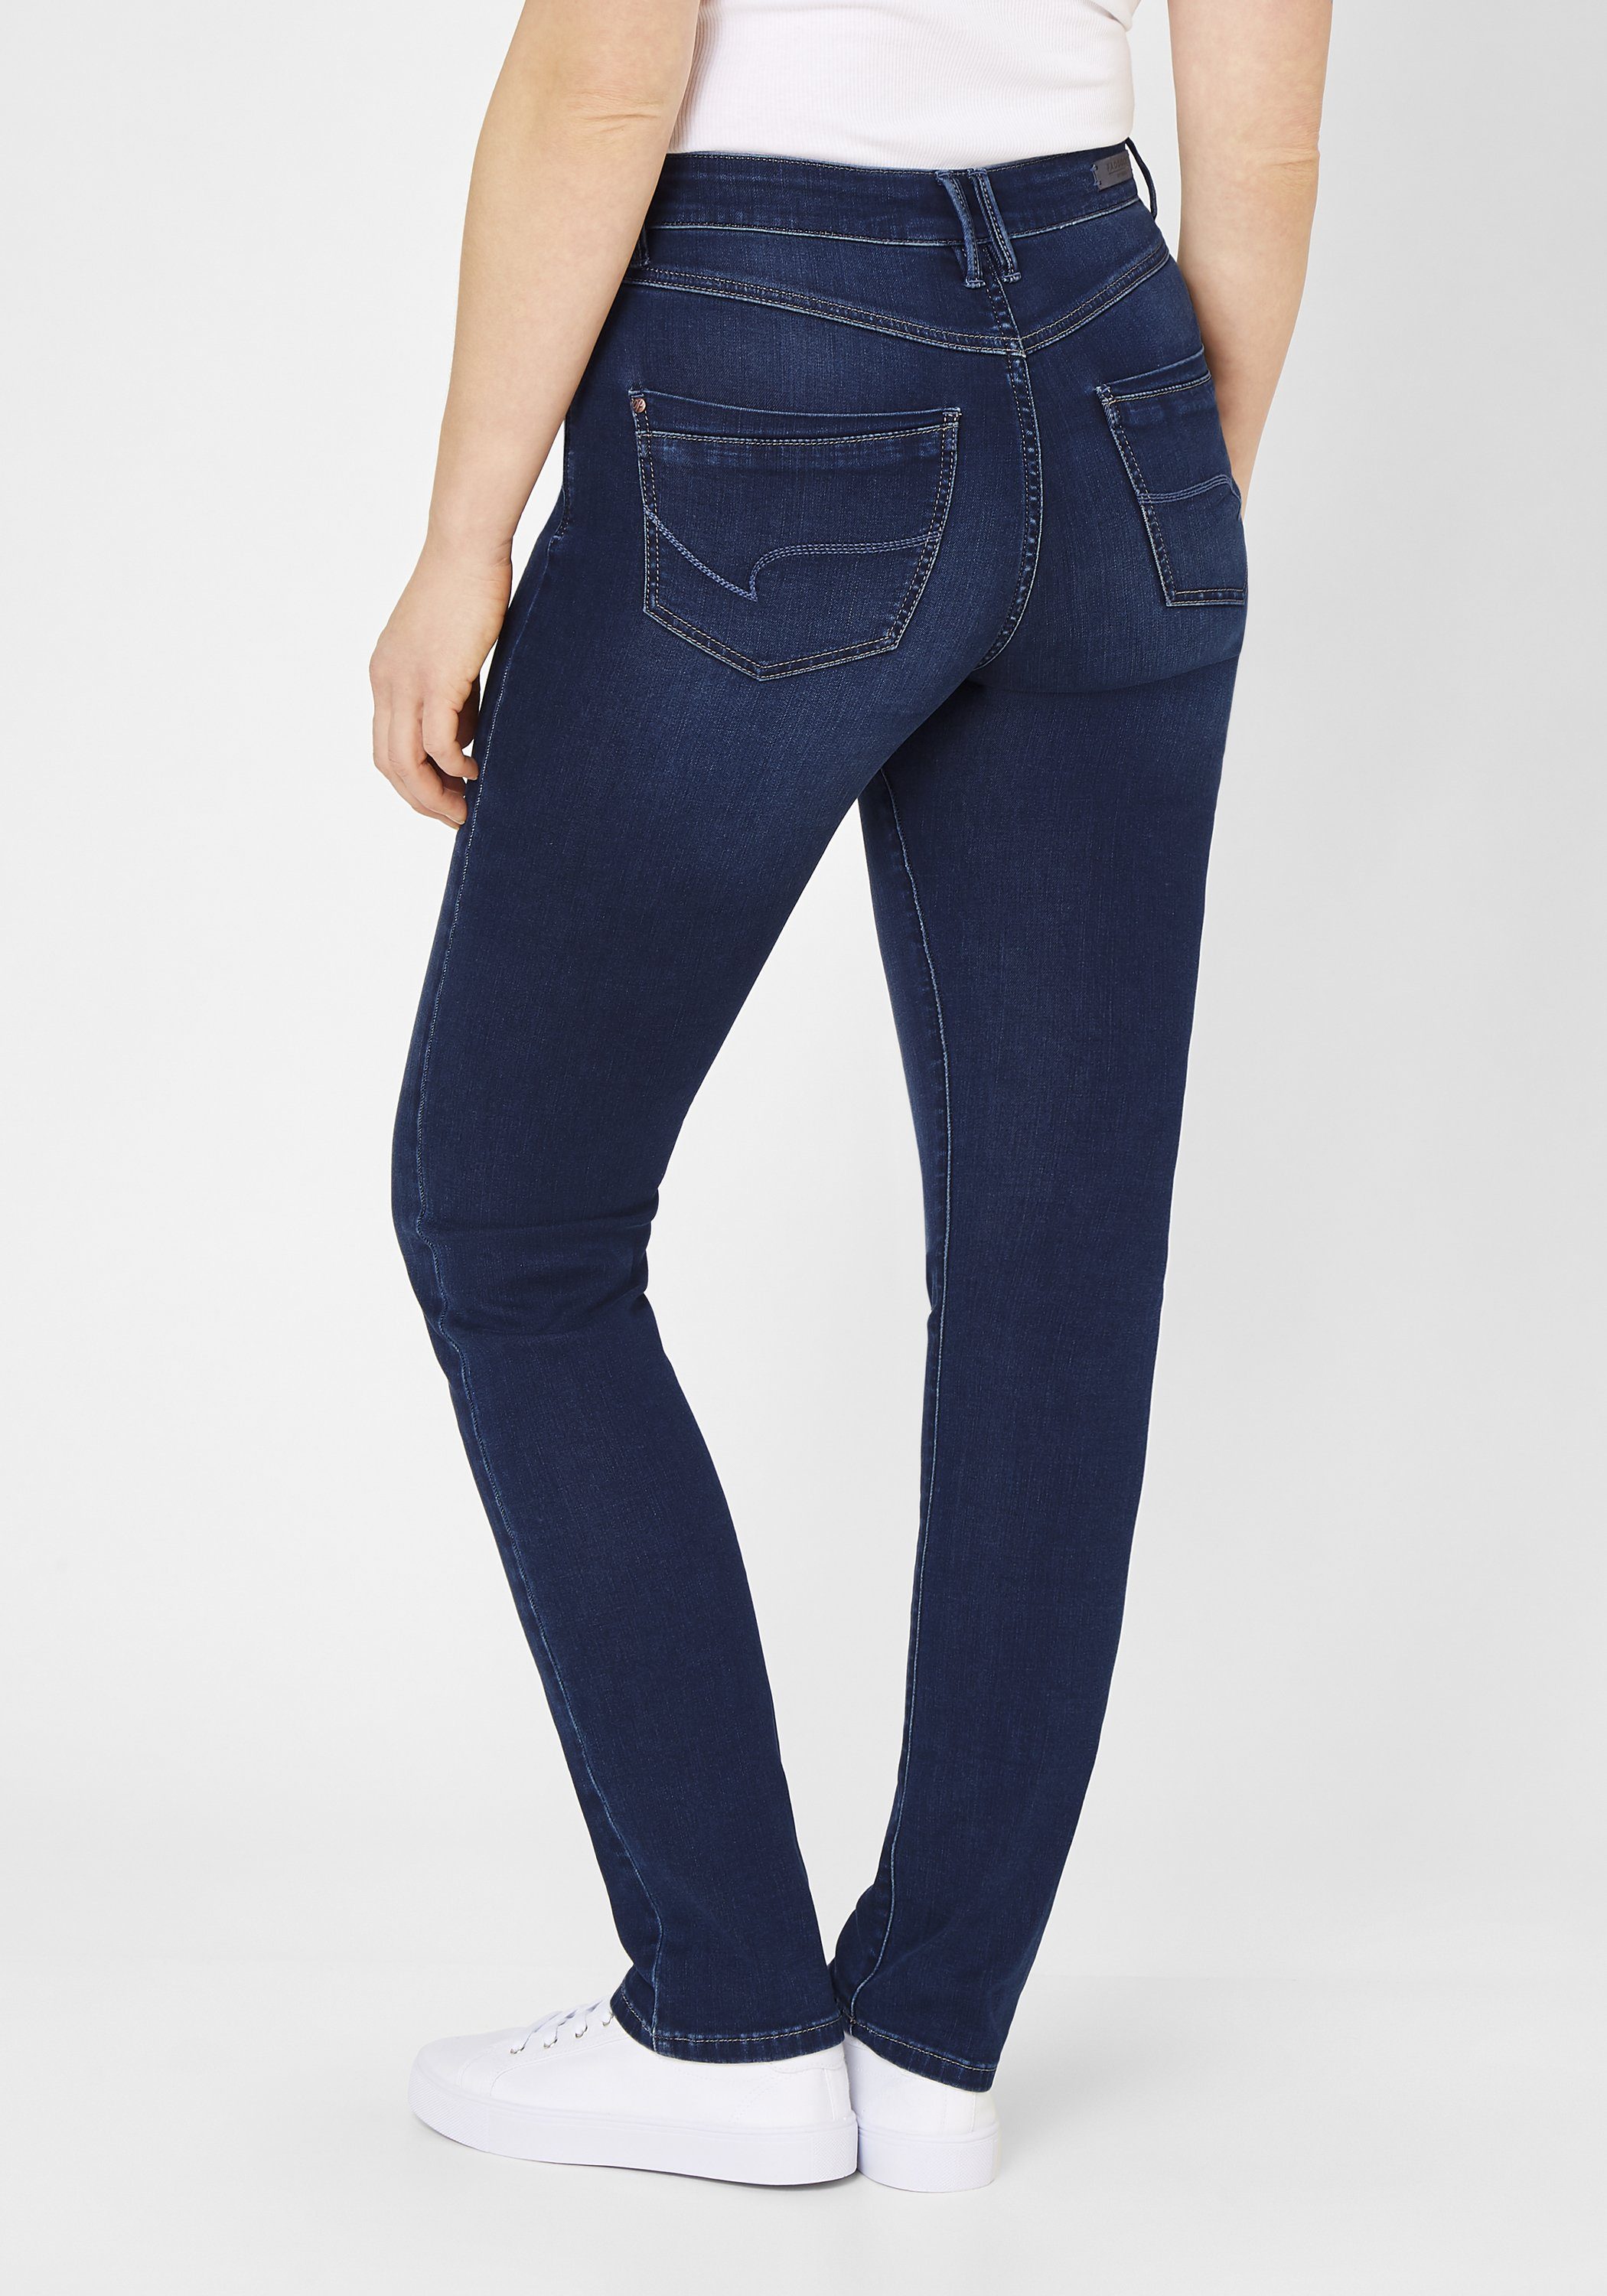 PAT mit Jeans stone Slim-Fit Stretch Paddock's used soft 5-Pocket-Jeans dark